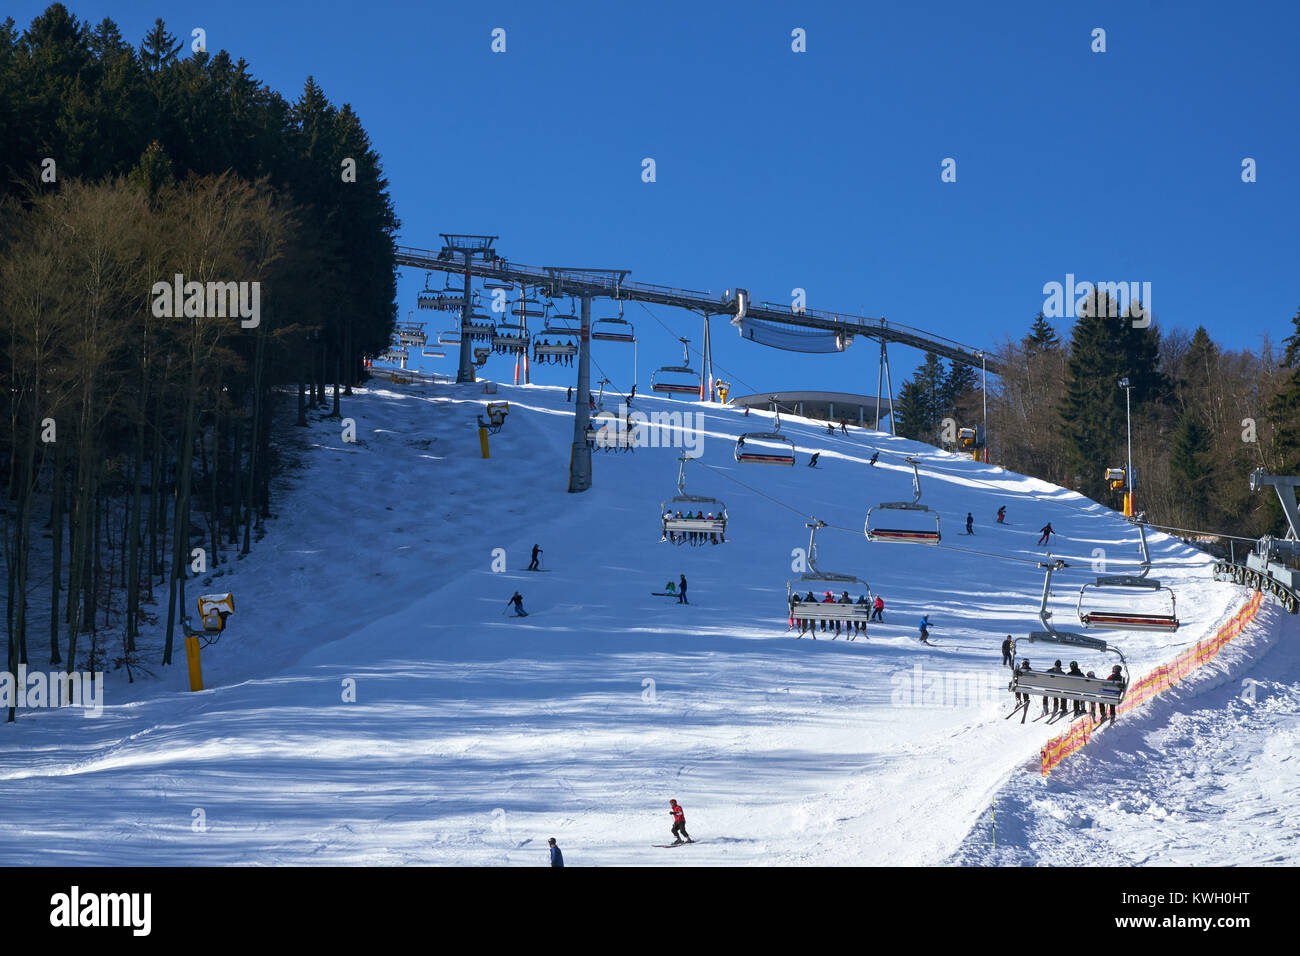 WINTERBERG, Deutschland - 15. FEBRUAR 2017: Sechs er Sesselbahn über eine Piste an Skikarussell Winterberg Stockfoto